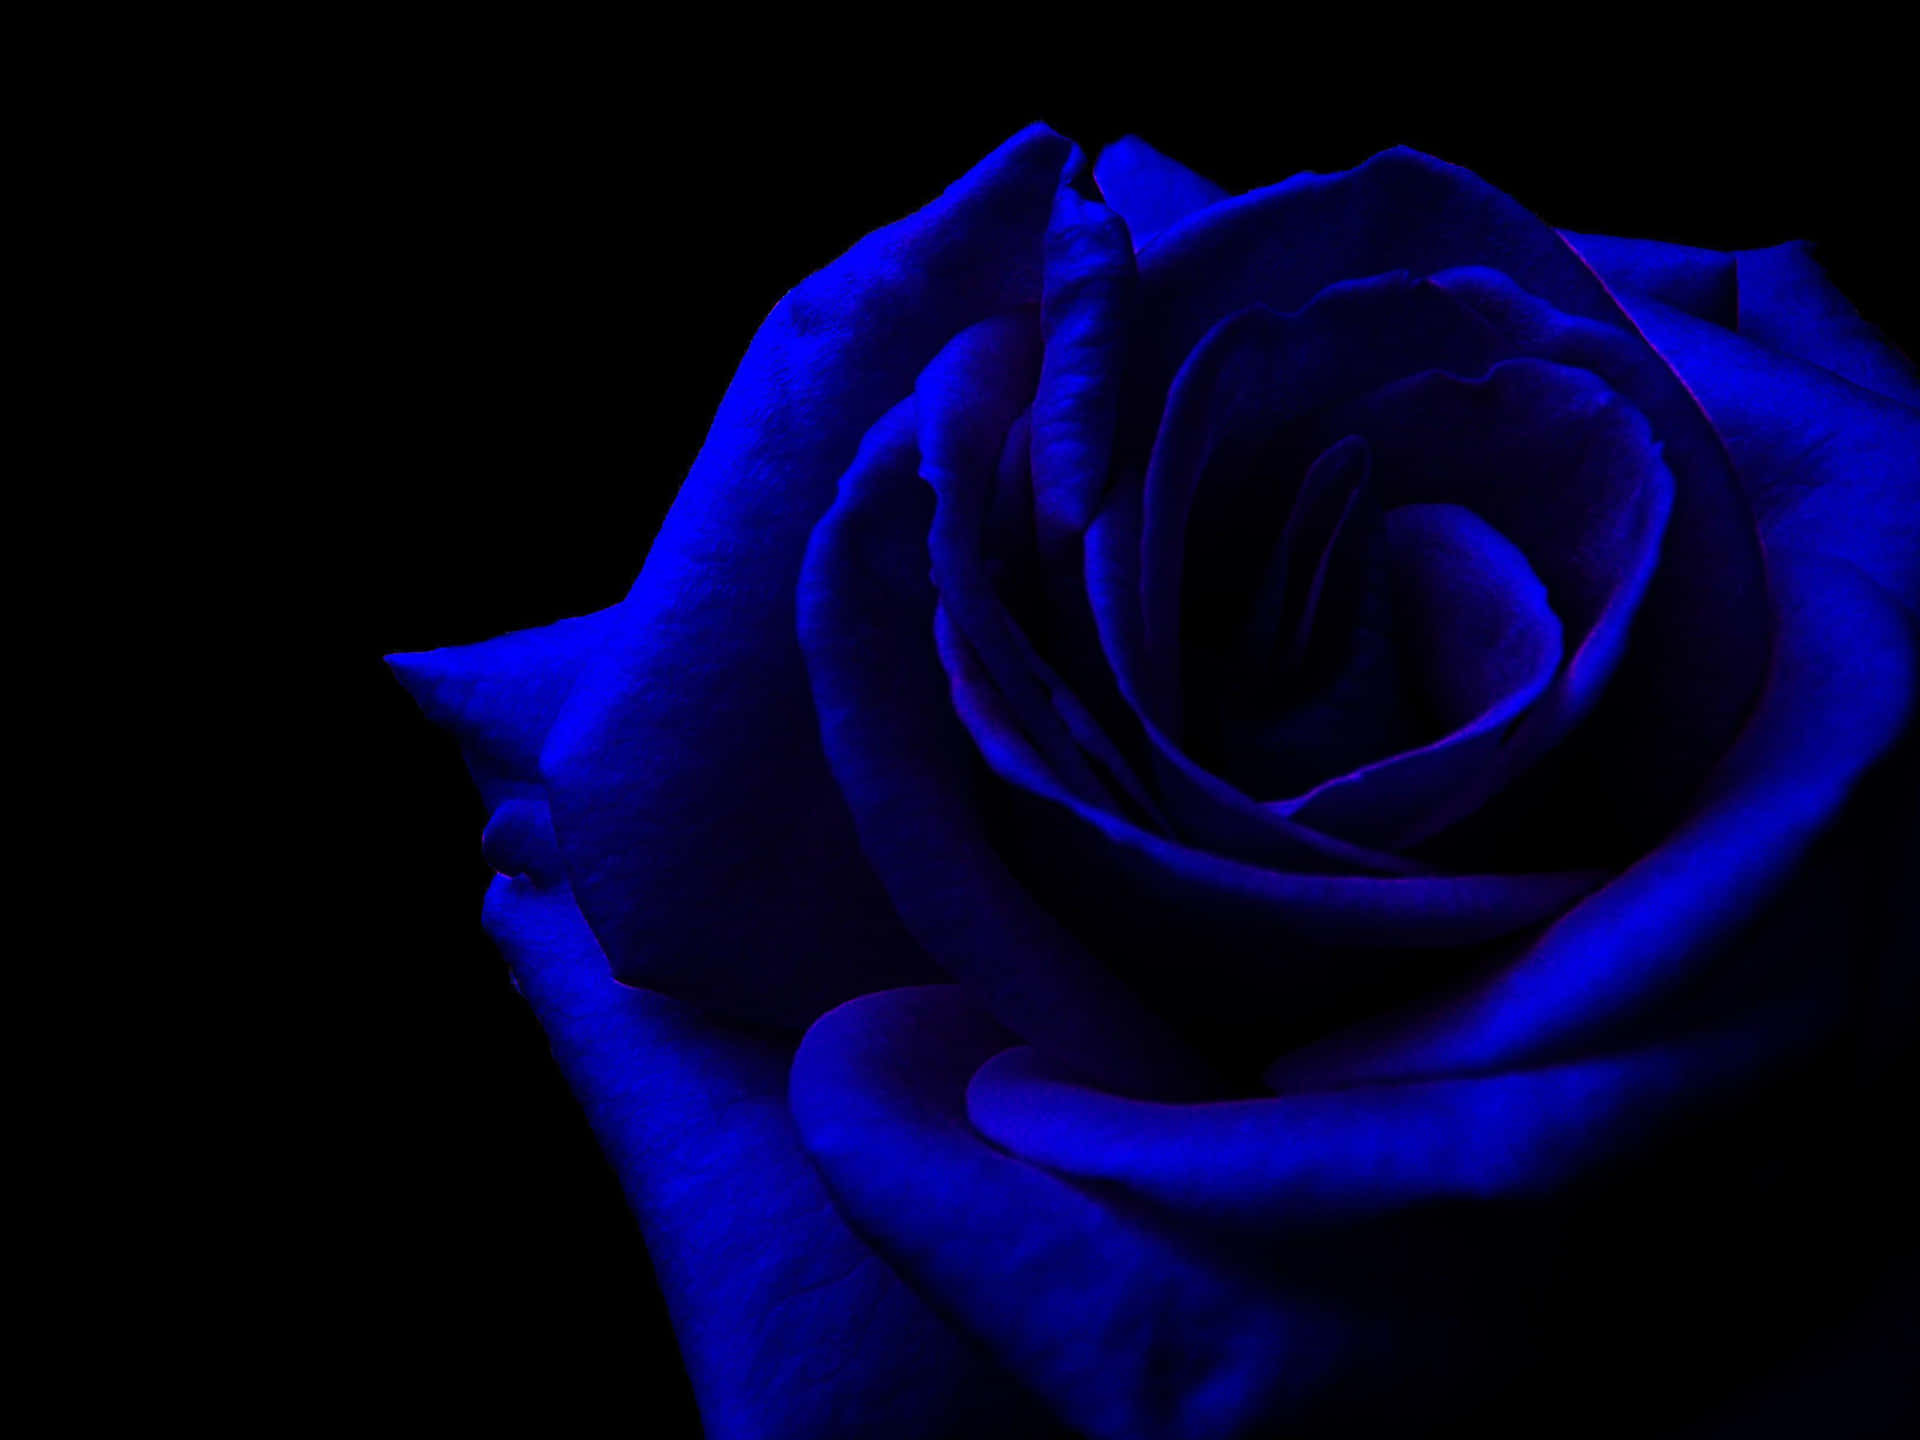 A Blue Rose On A Black Background Wallpaper